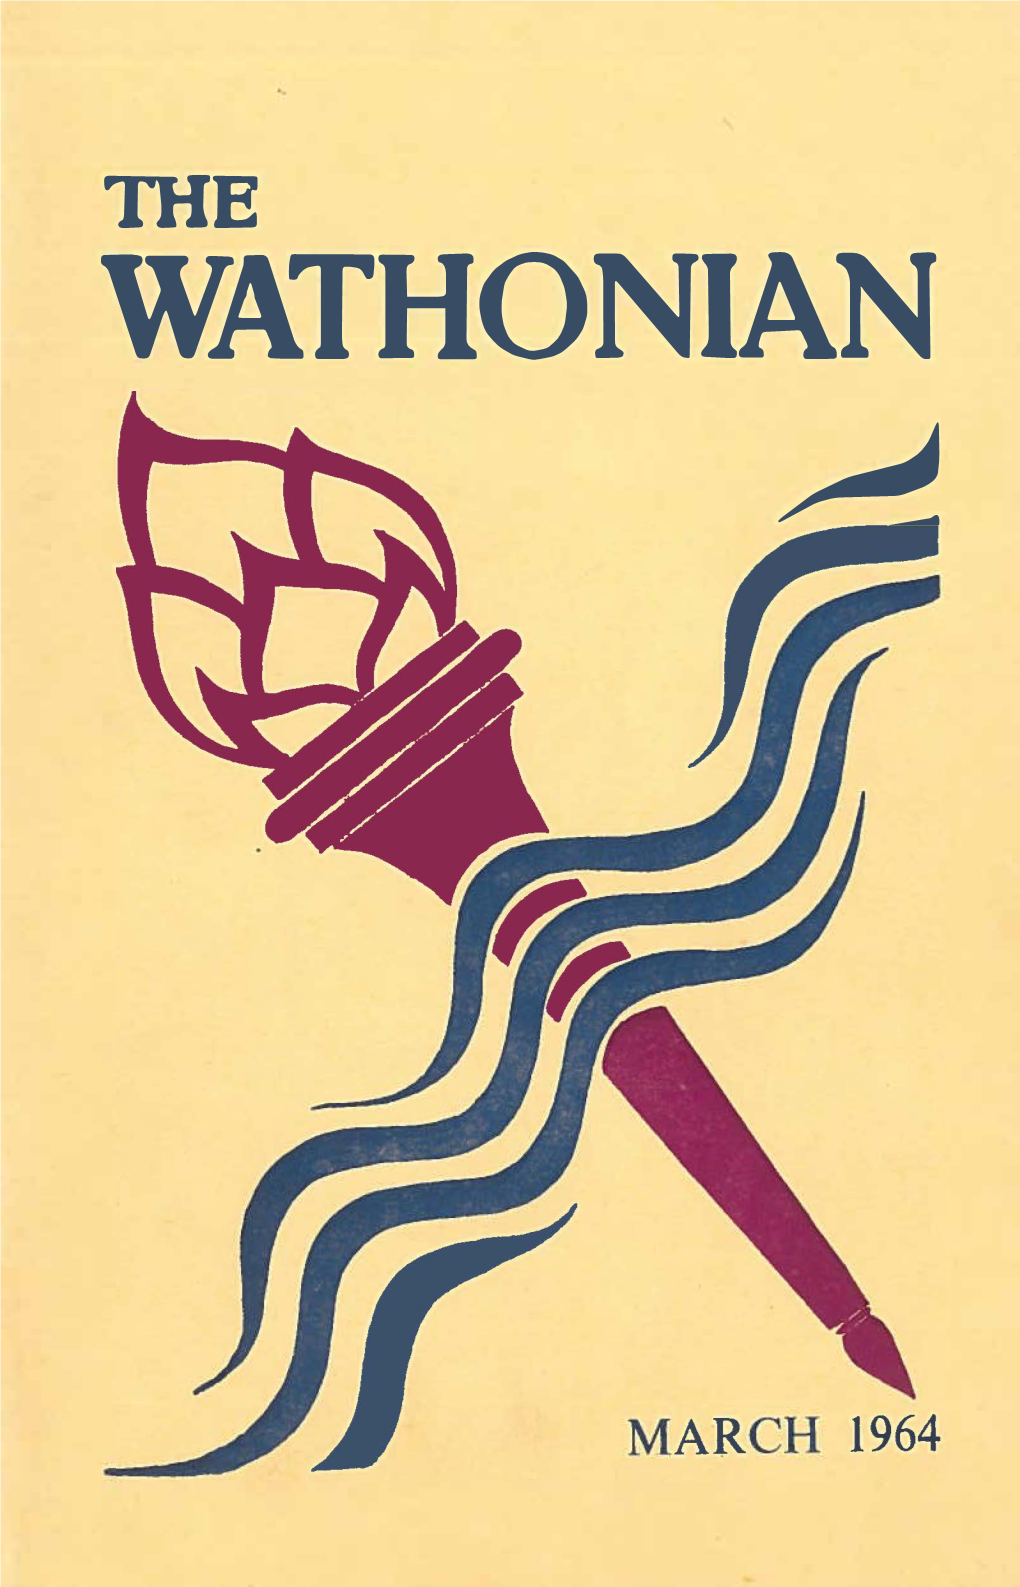 The Wathonian, 1964